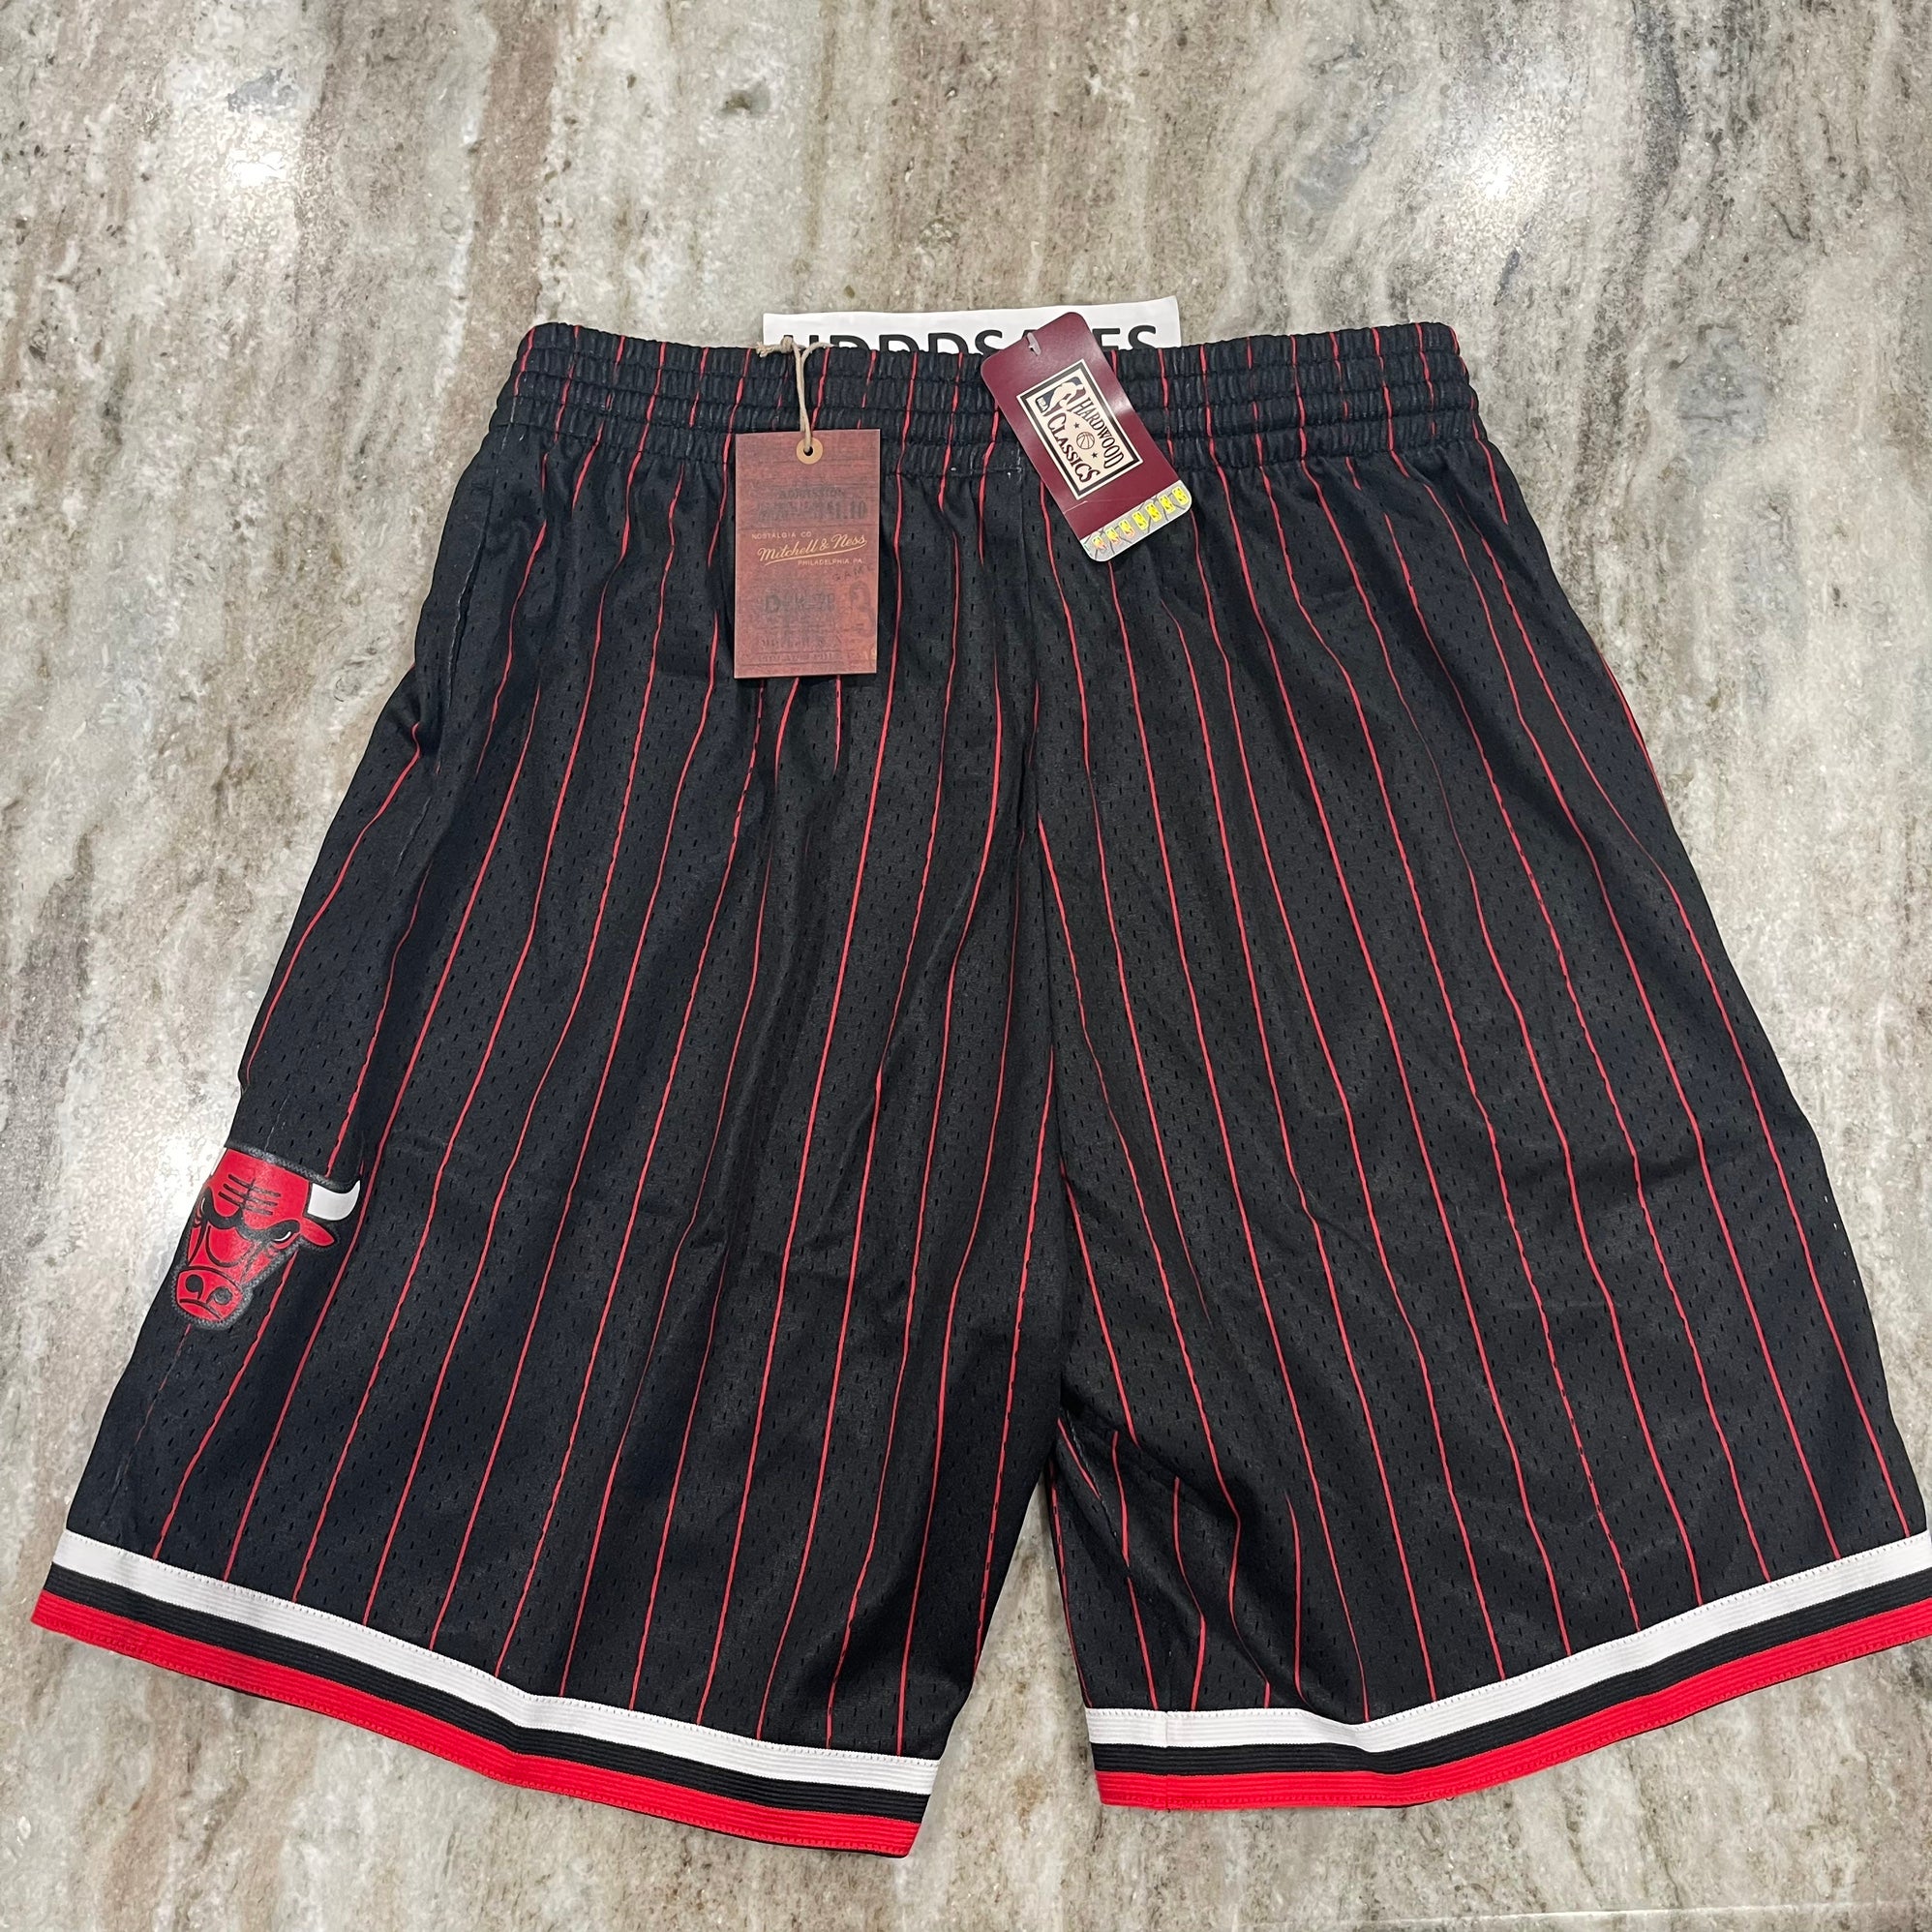 Mitchell & Ness Authentic Shorts - Chicago Bulls '96